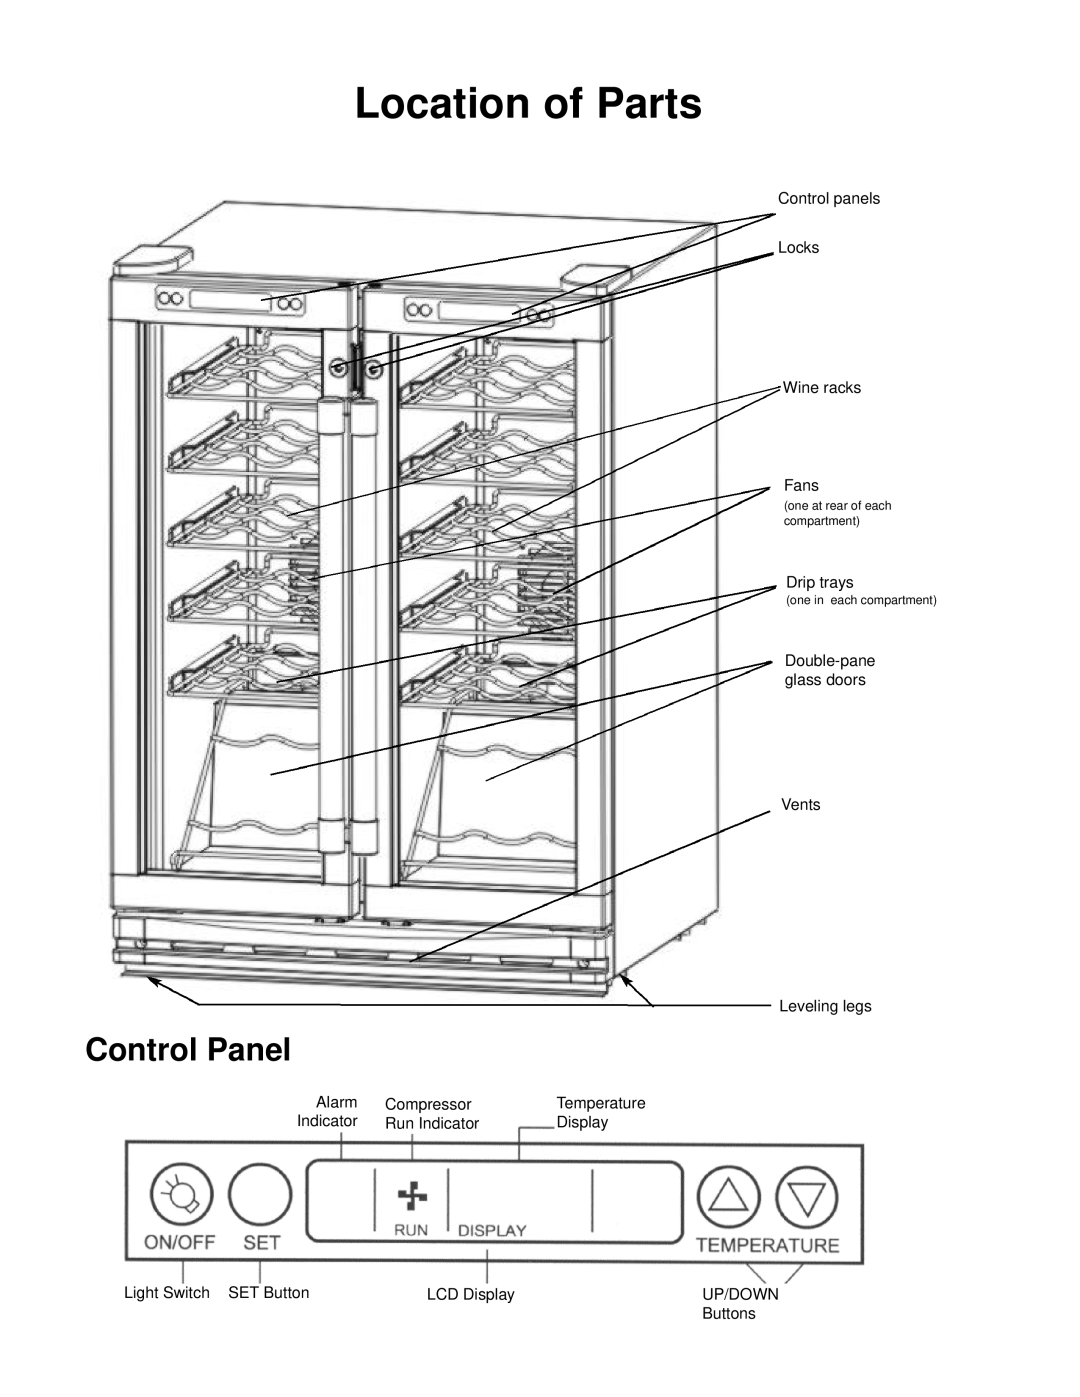 Franklin Industries, L.L.C FWC36 manual Location of Parts, Control Panel 